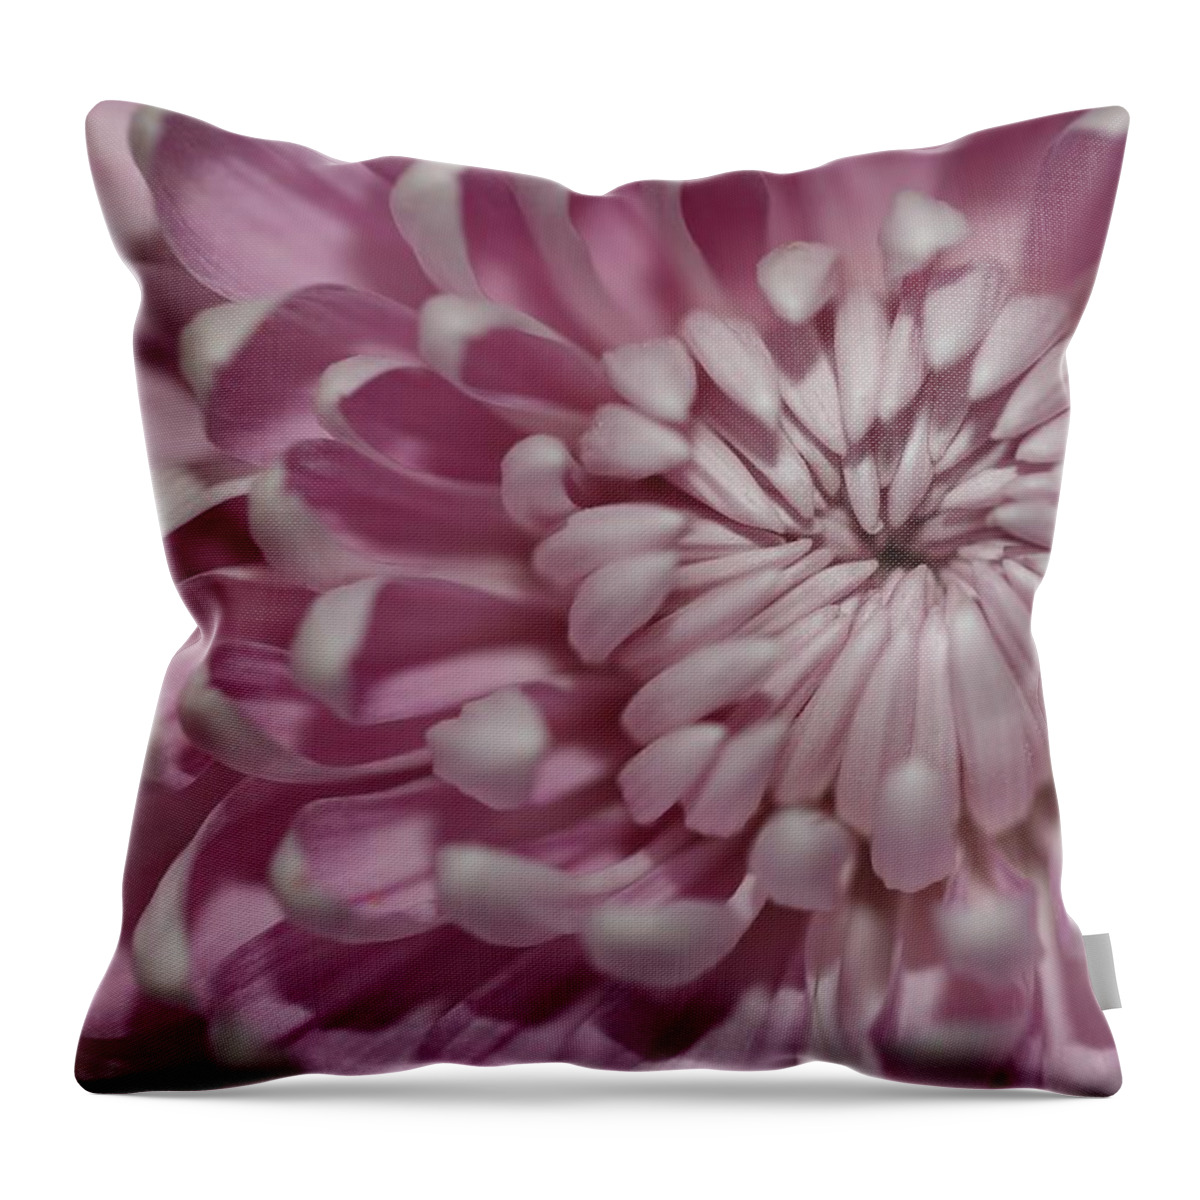 Chrysanthemum Throw Pillow featuring the photograph Pink Chrysanthemum by Mingming Jiang